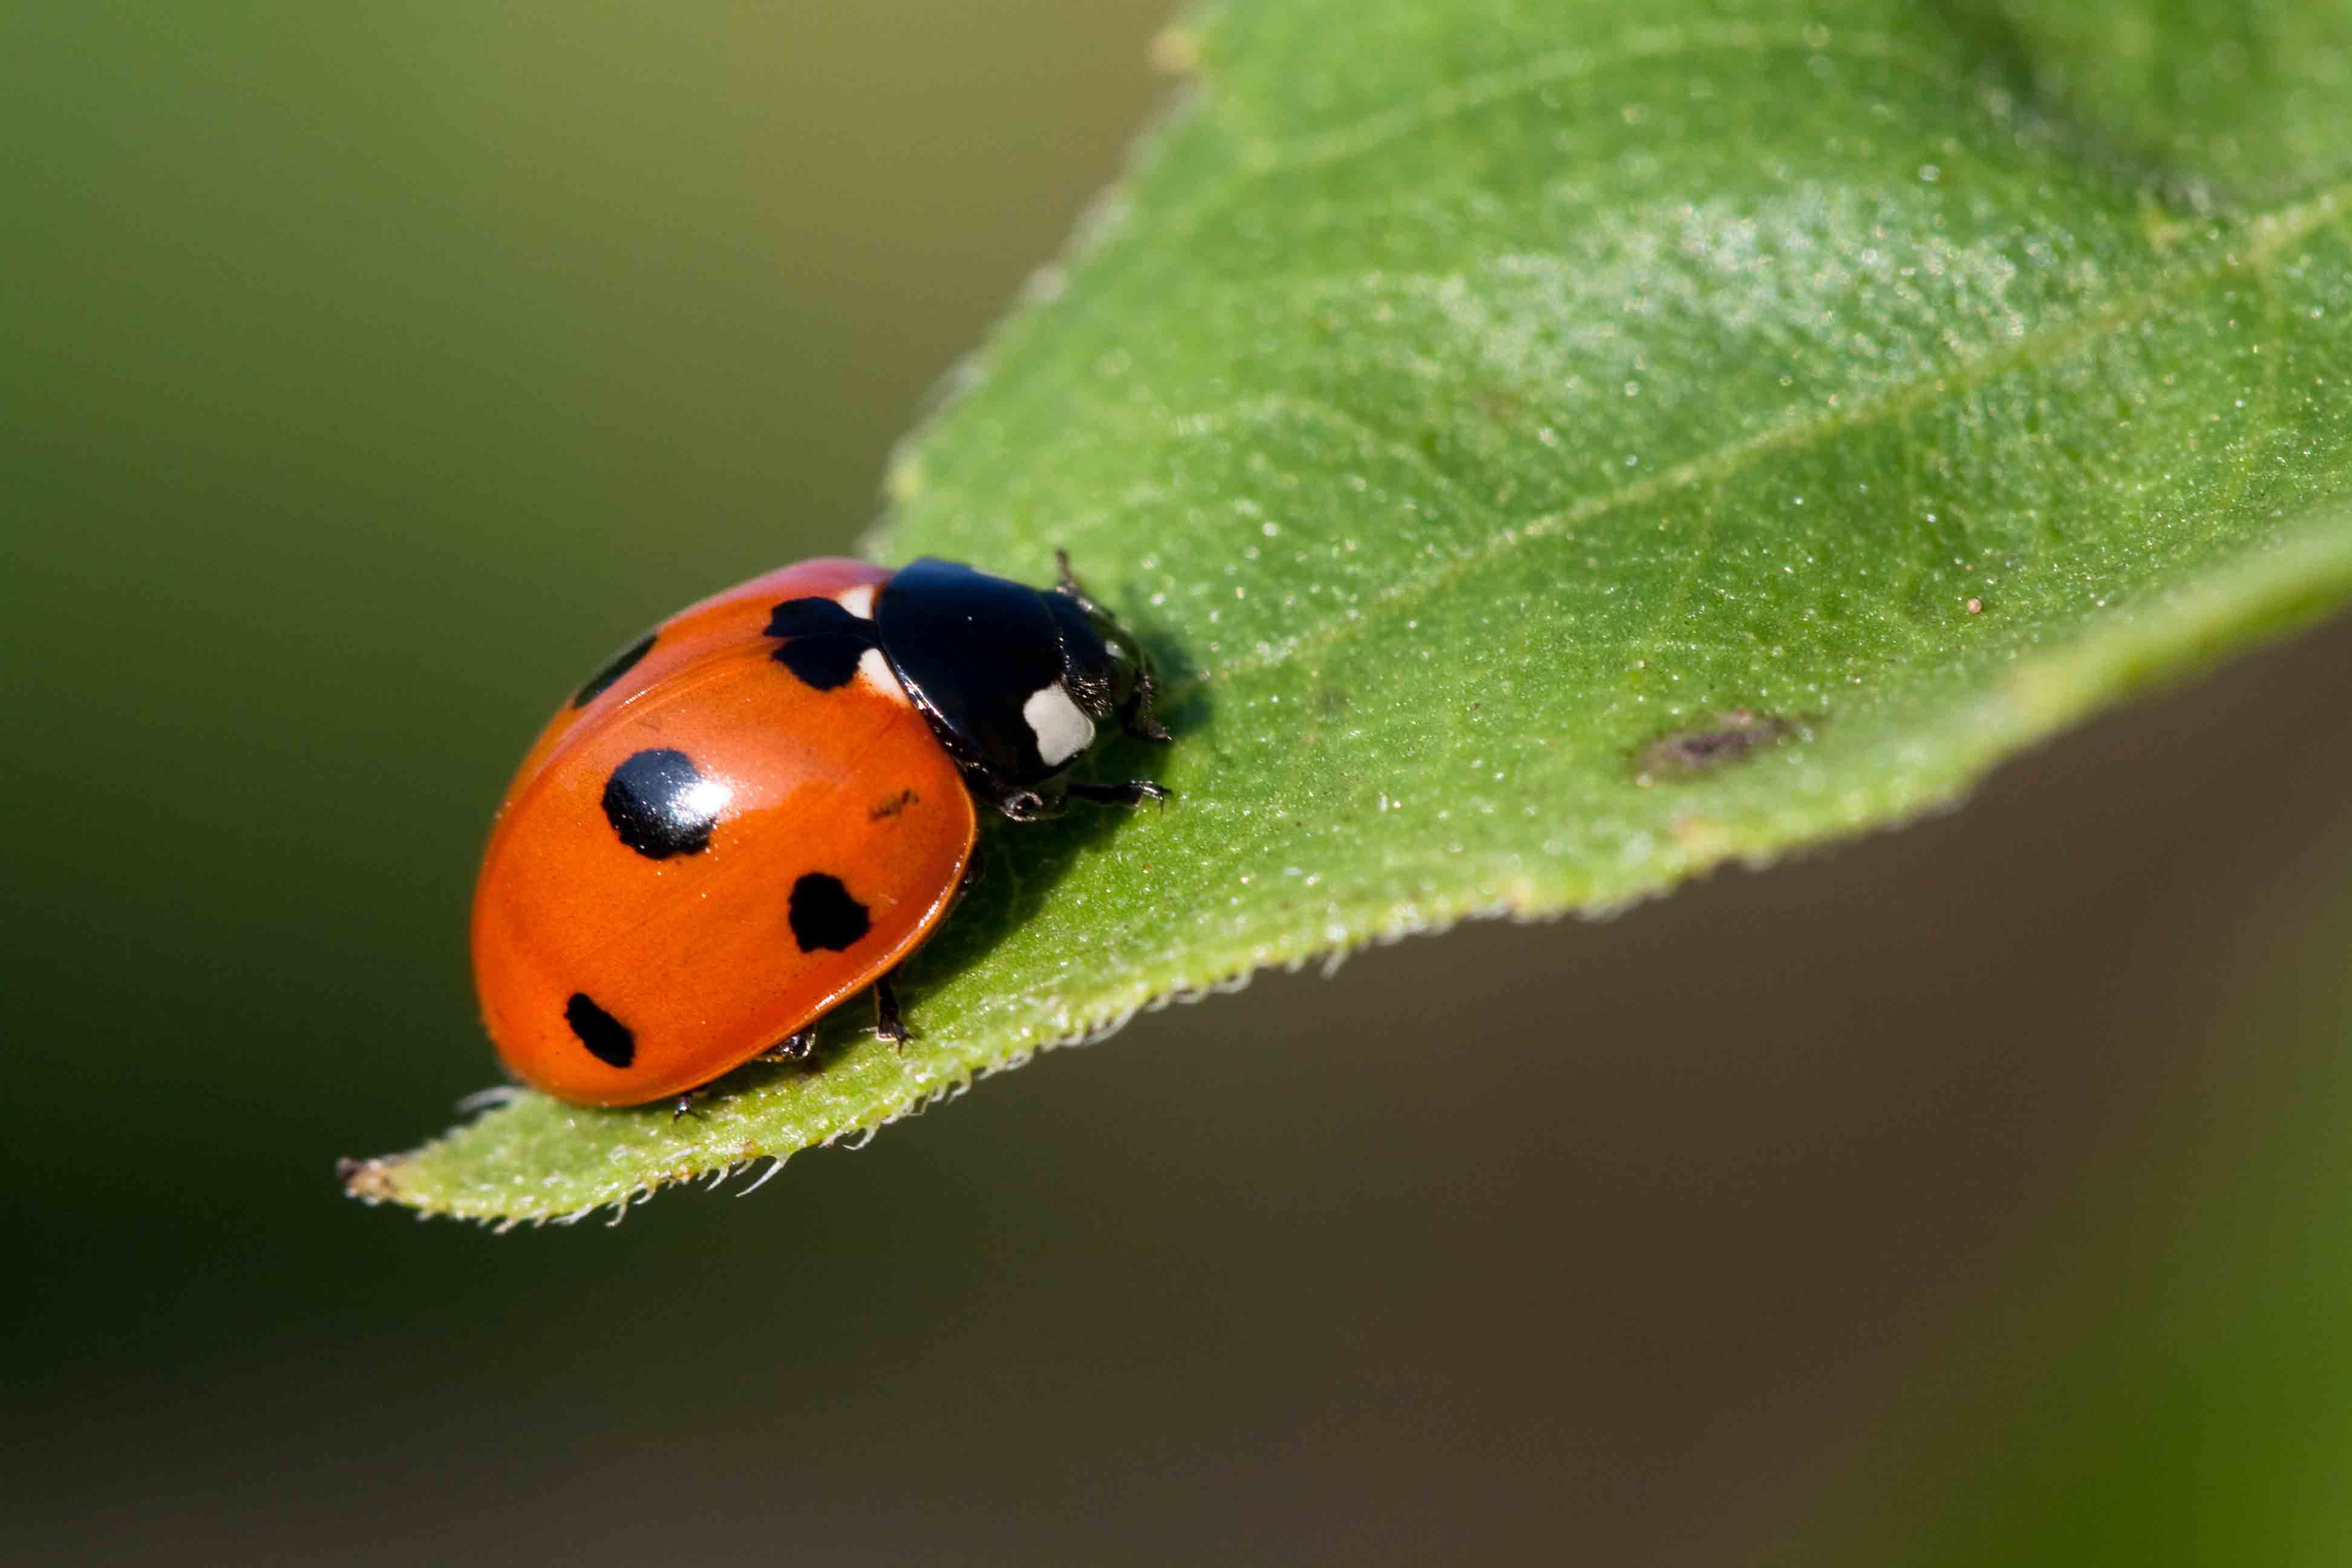 7 spot ladybird sat on a leaf